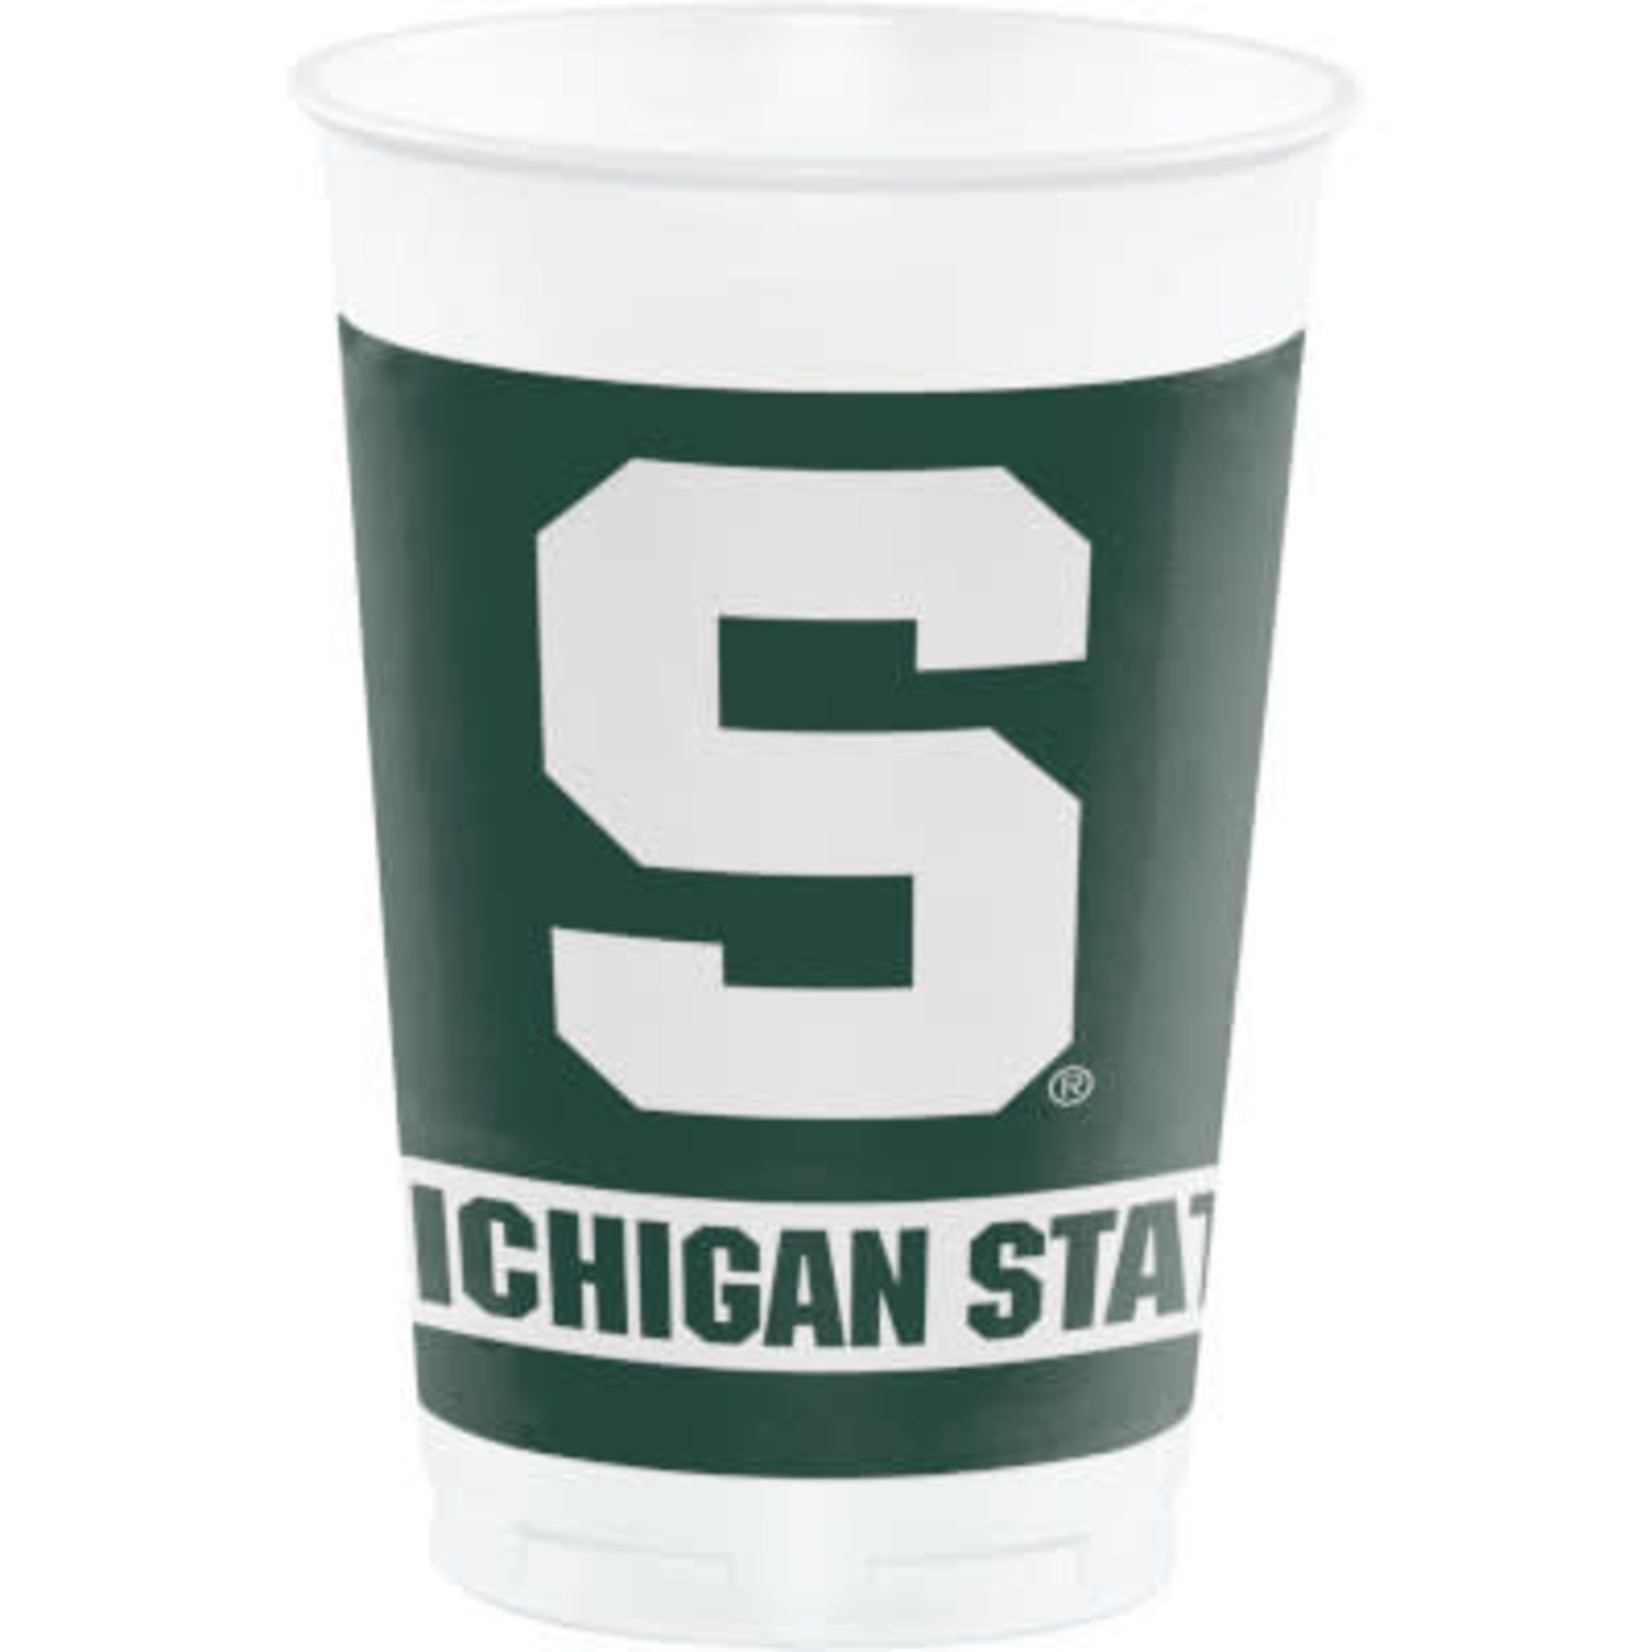 COLLG 20oz. Michigan State University Plastic Cups - 8ct.